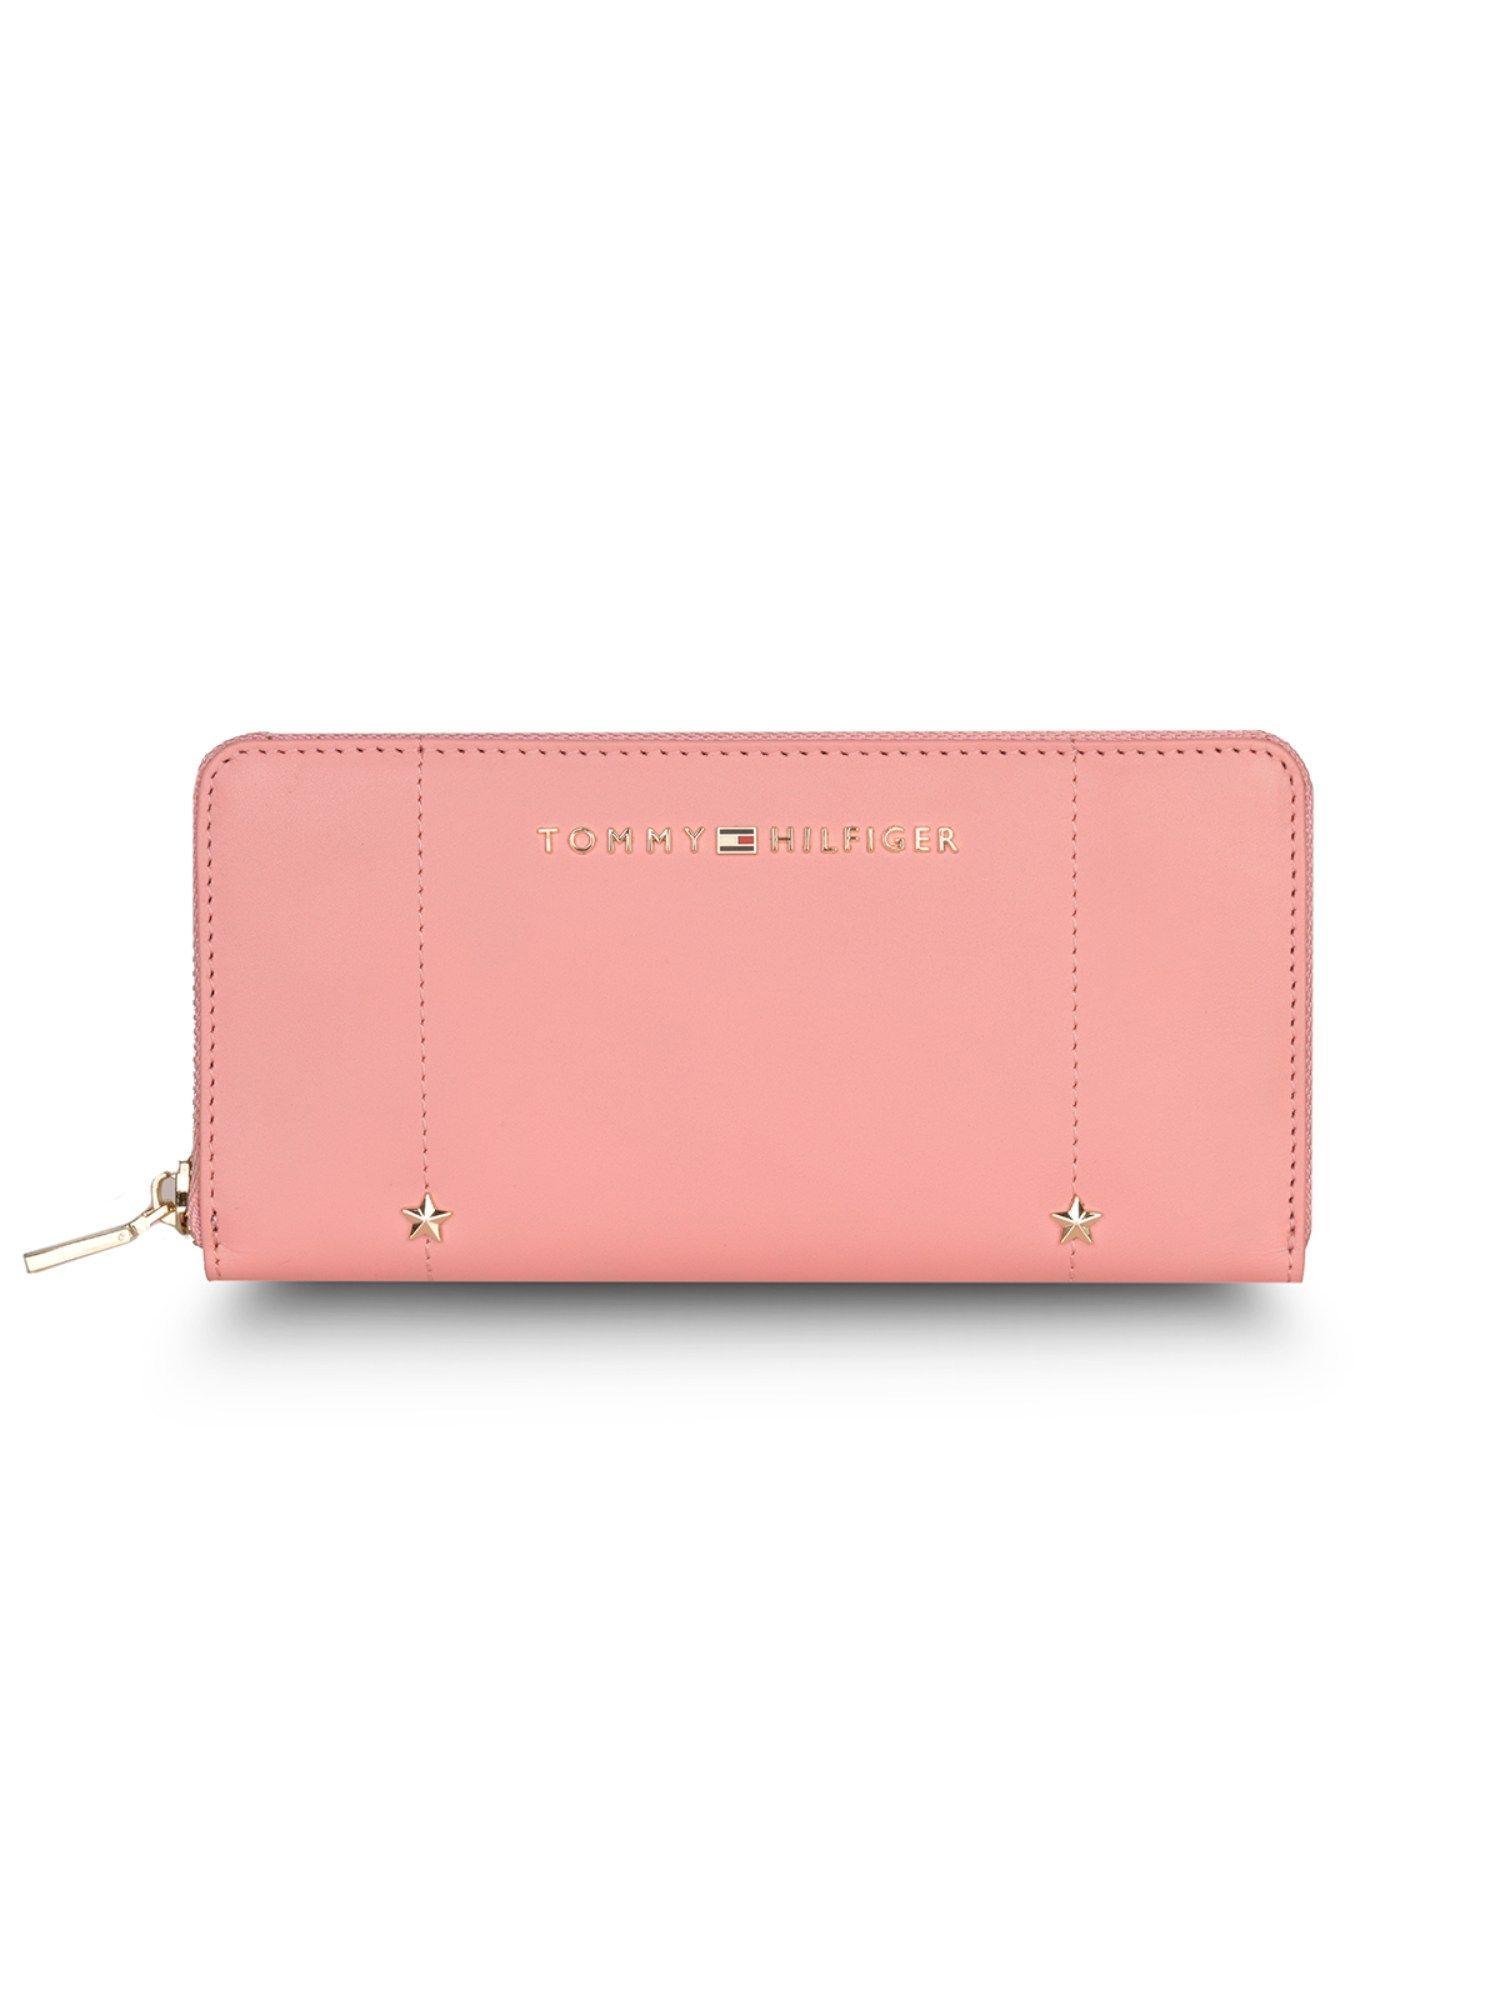 pajares women leather wallet pink